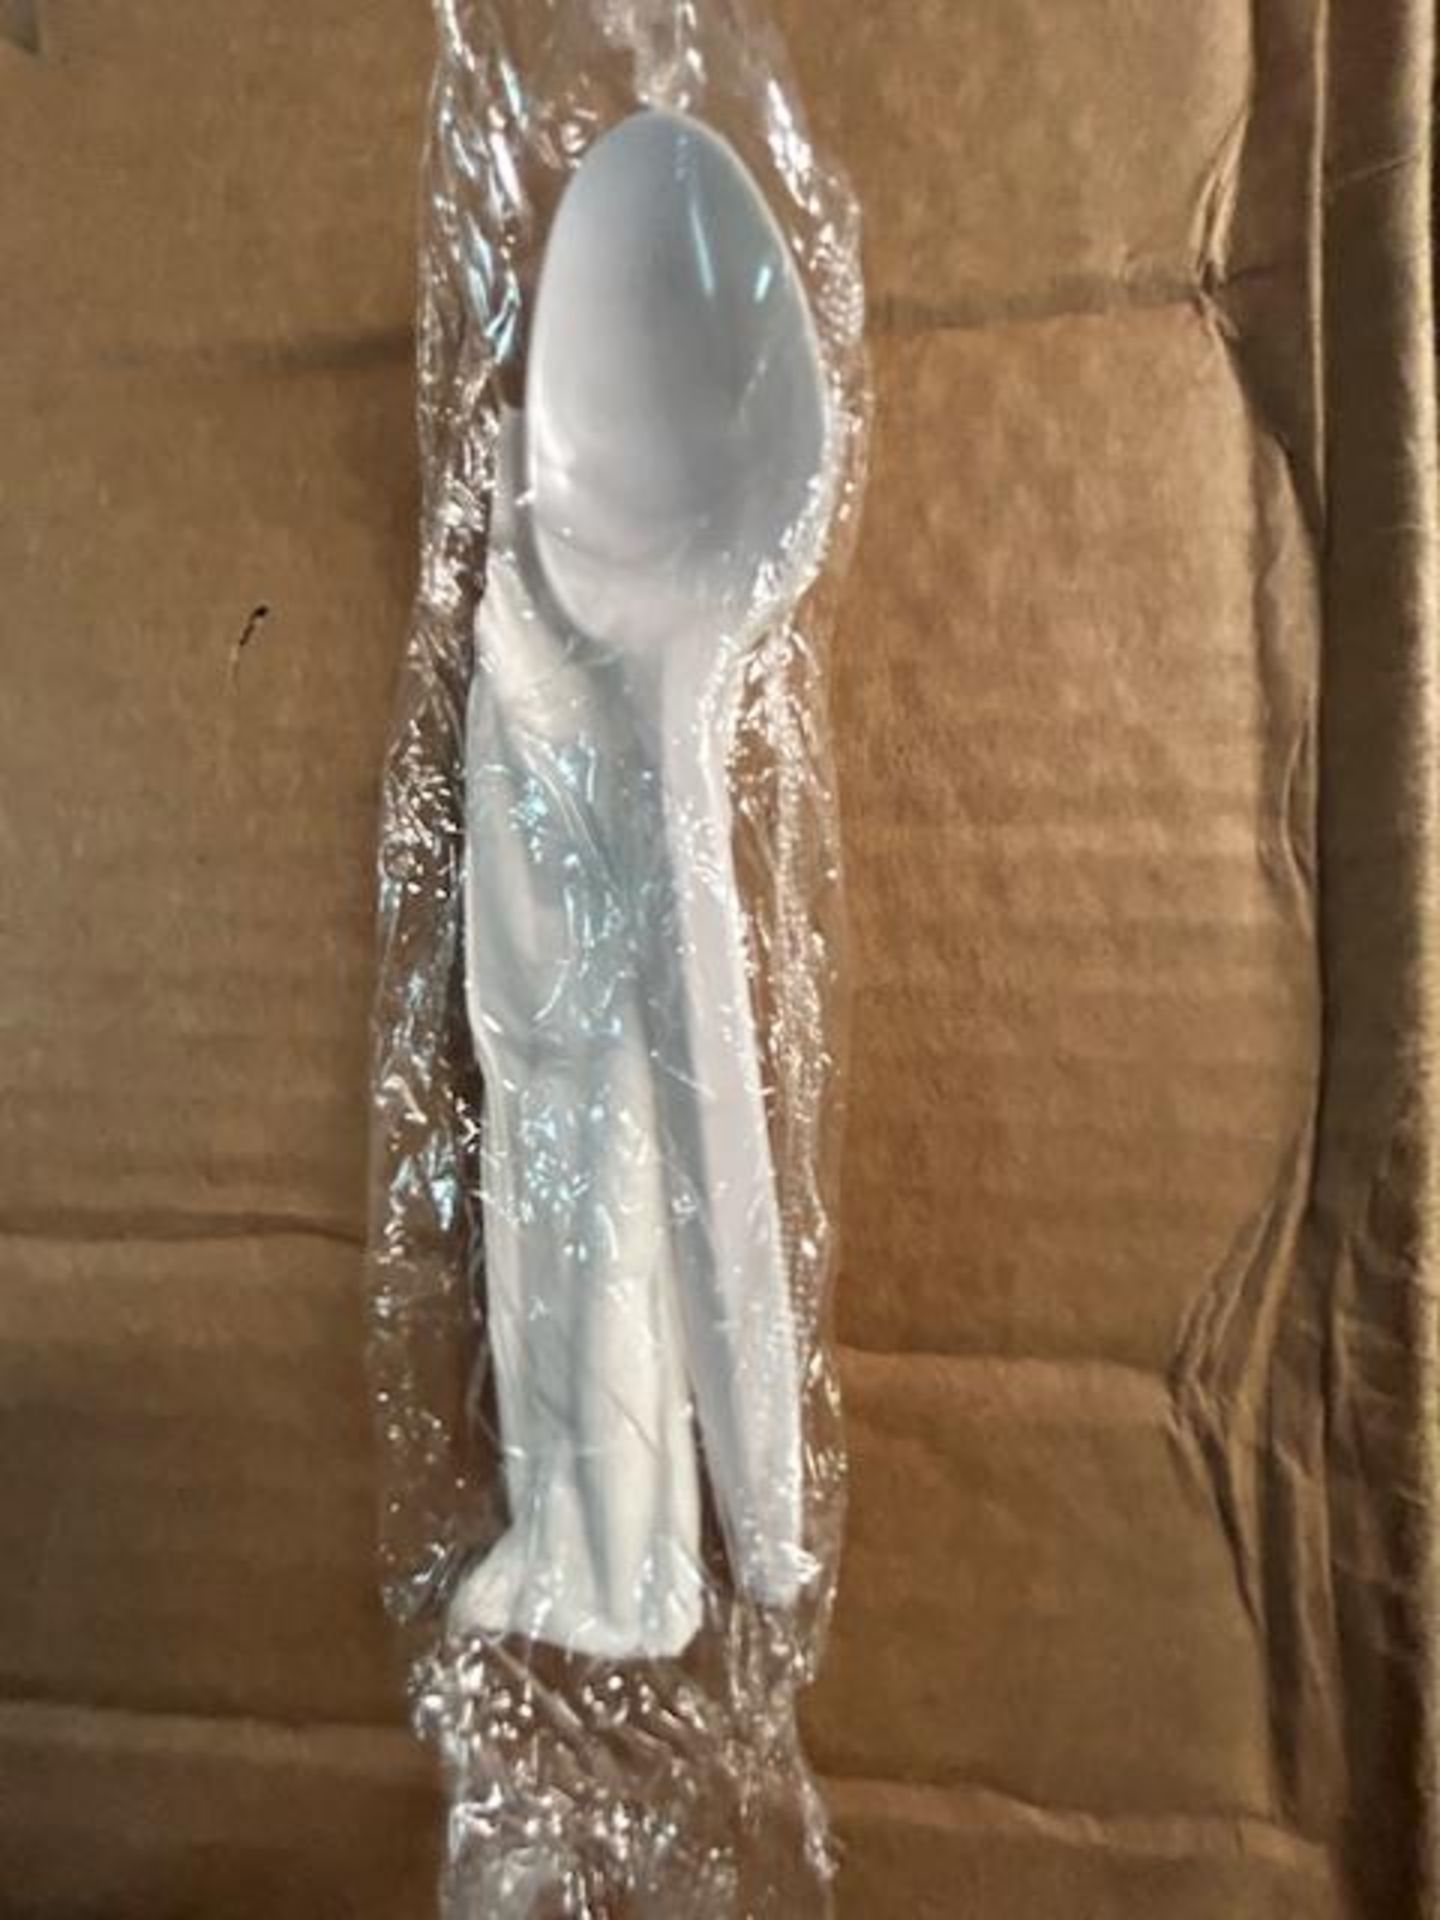 (11) Cases - 2 Piece Medium Weight Cutlery Kit - 1 Teaspoon & 1 Napkin per Pack (2000 Packs/Case)